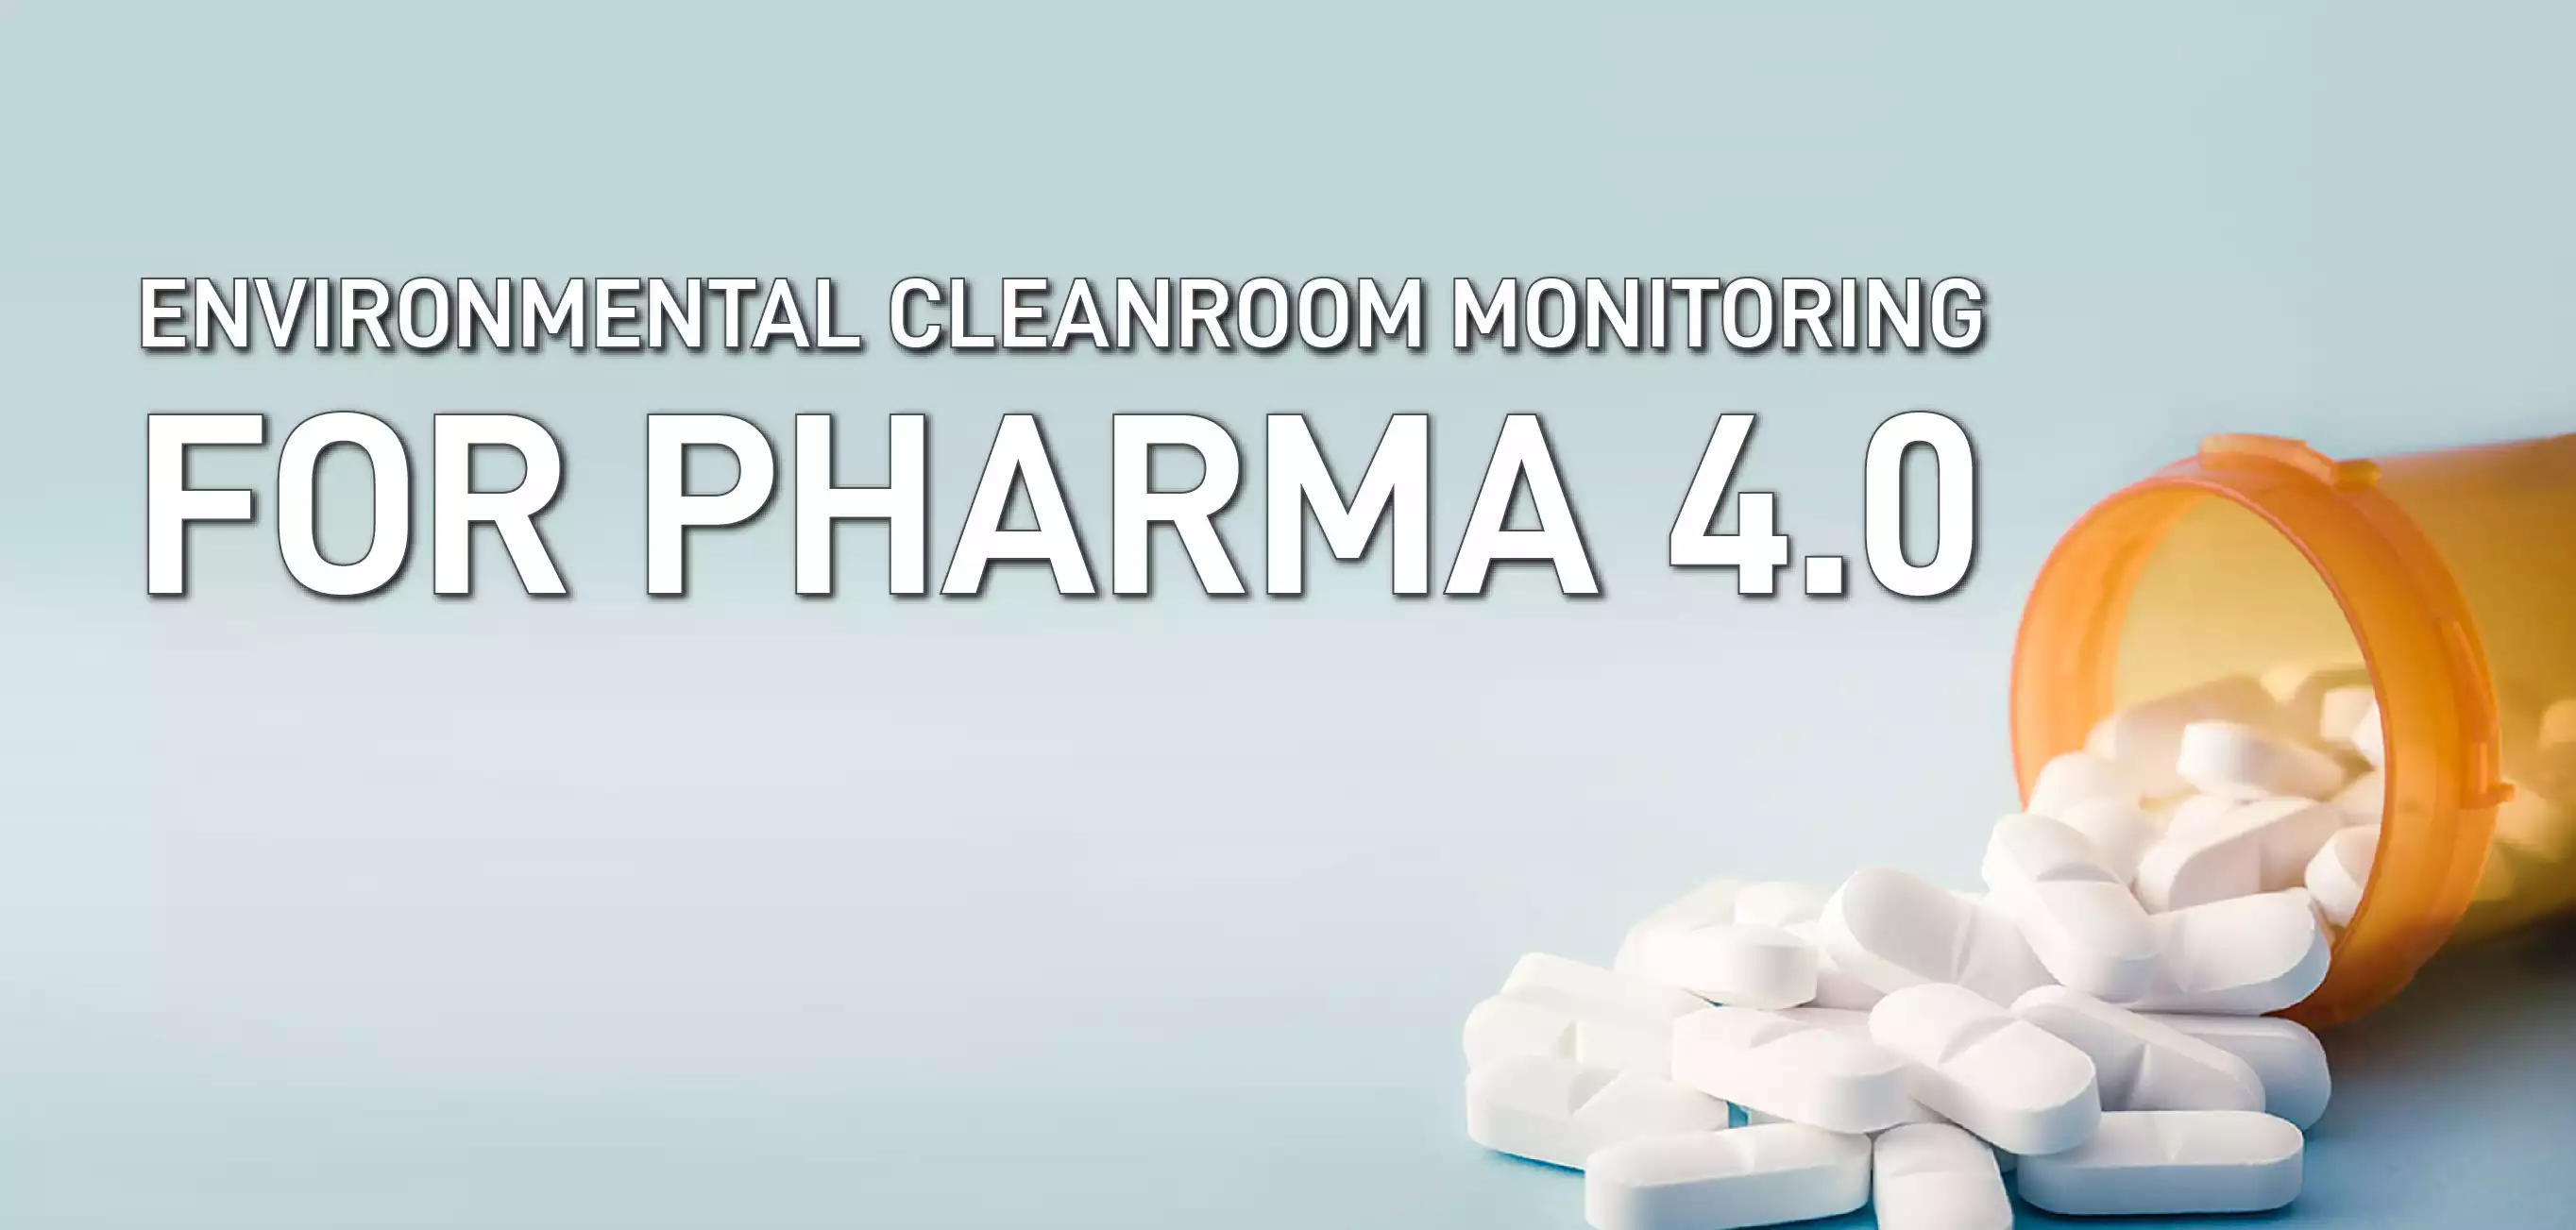 Environmental Cleanroom Monitoring for Pharma 4.0. by PMS